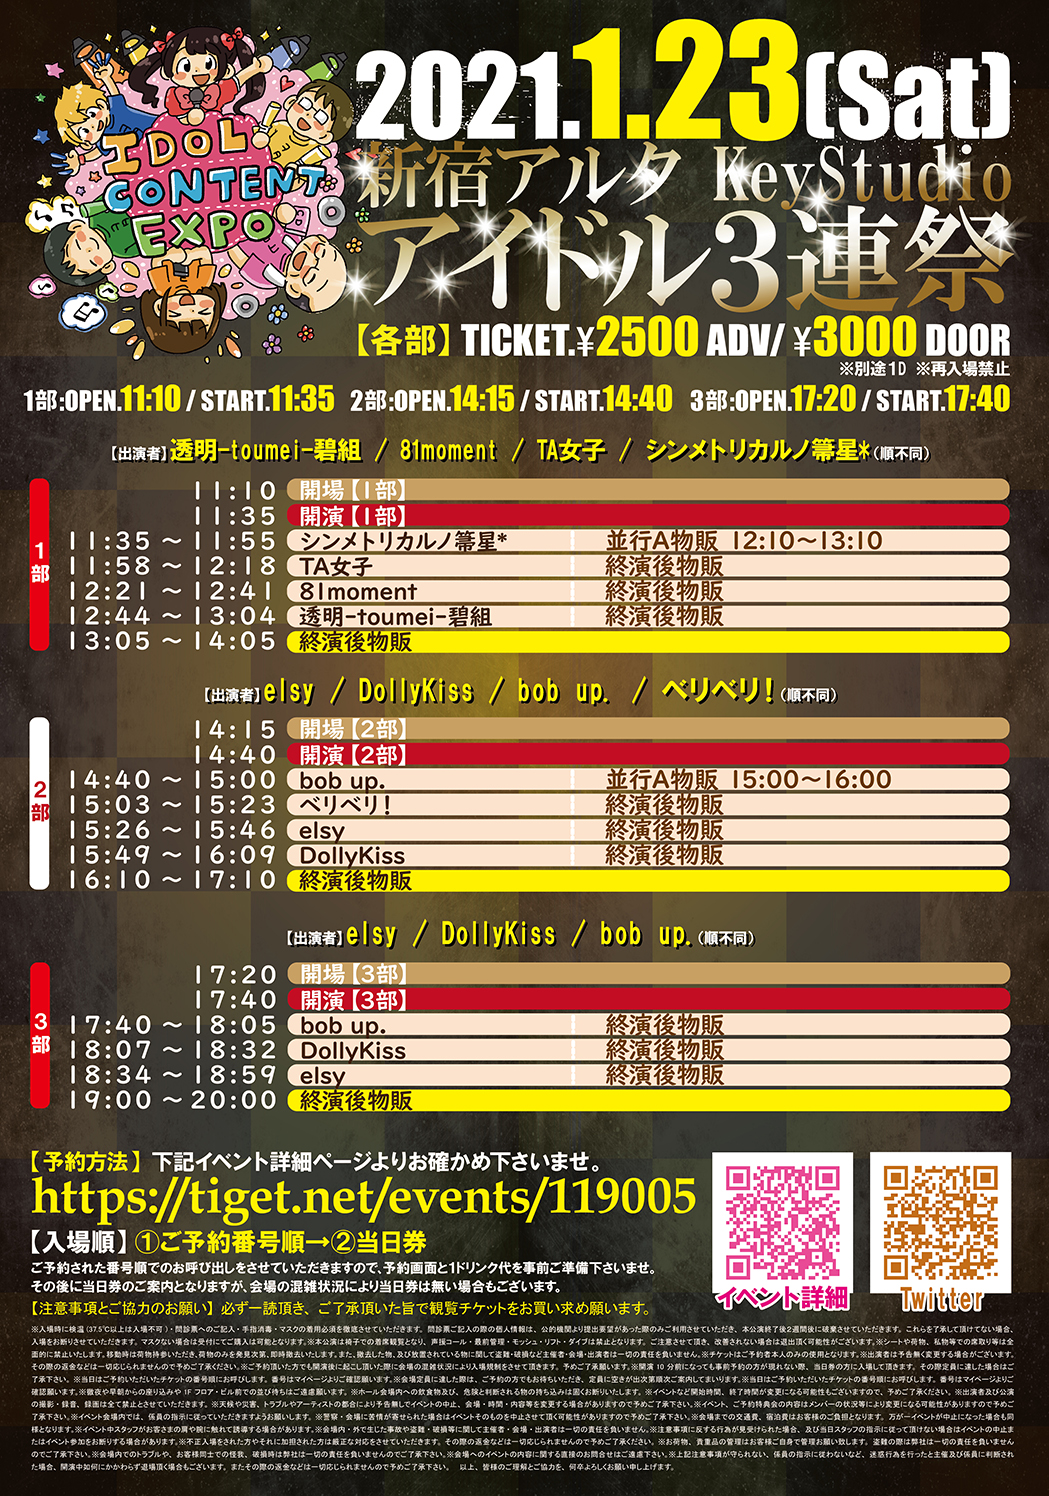 IDOL CONTENT EXPO @ 新宿アルタ KeyStudio アイドル３連祭